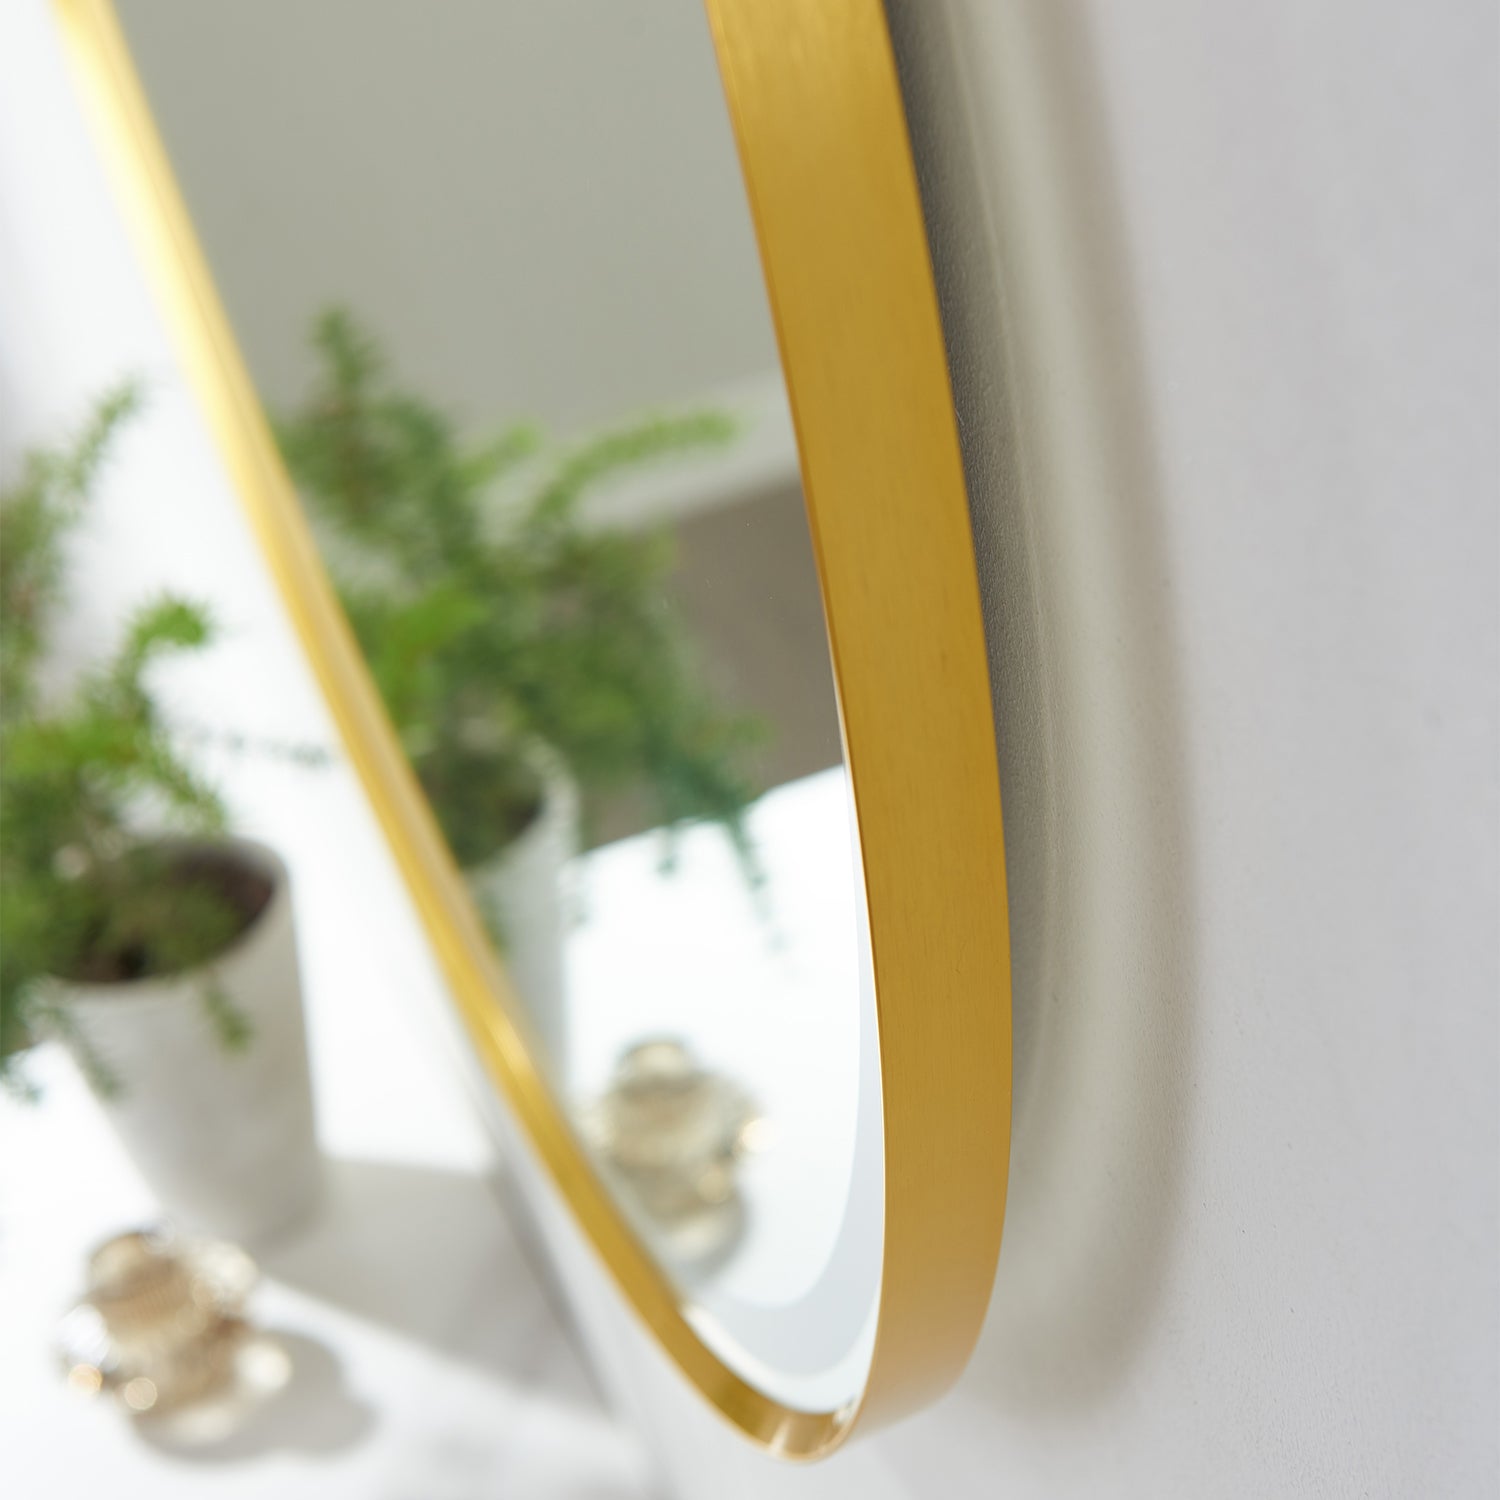 Vinnova Campobasso Round LED Lighted Accent Bathroom/Vanity Wall Mirror